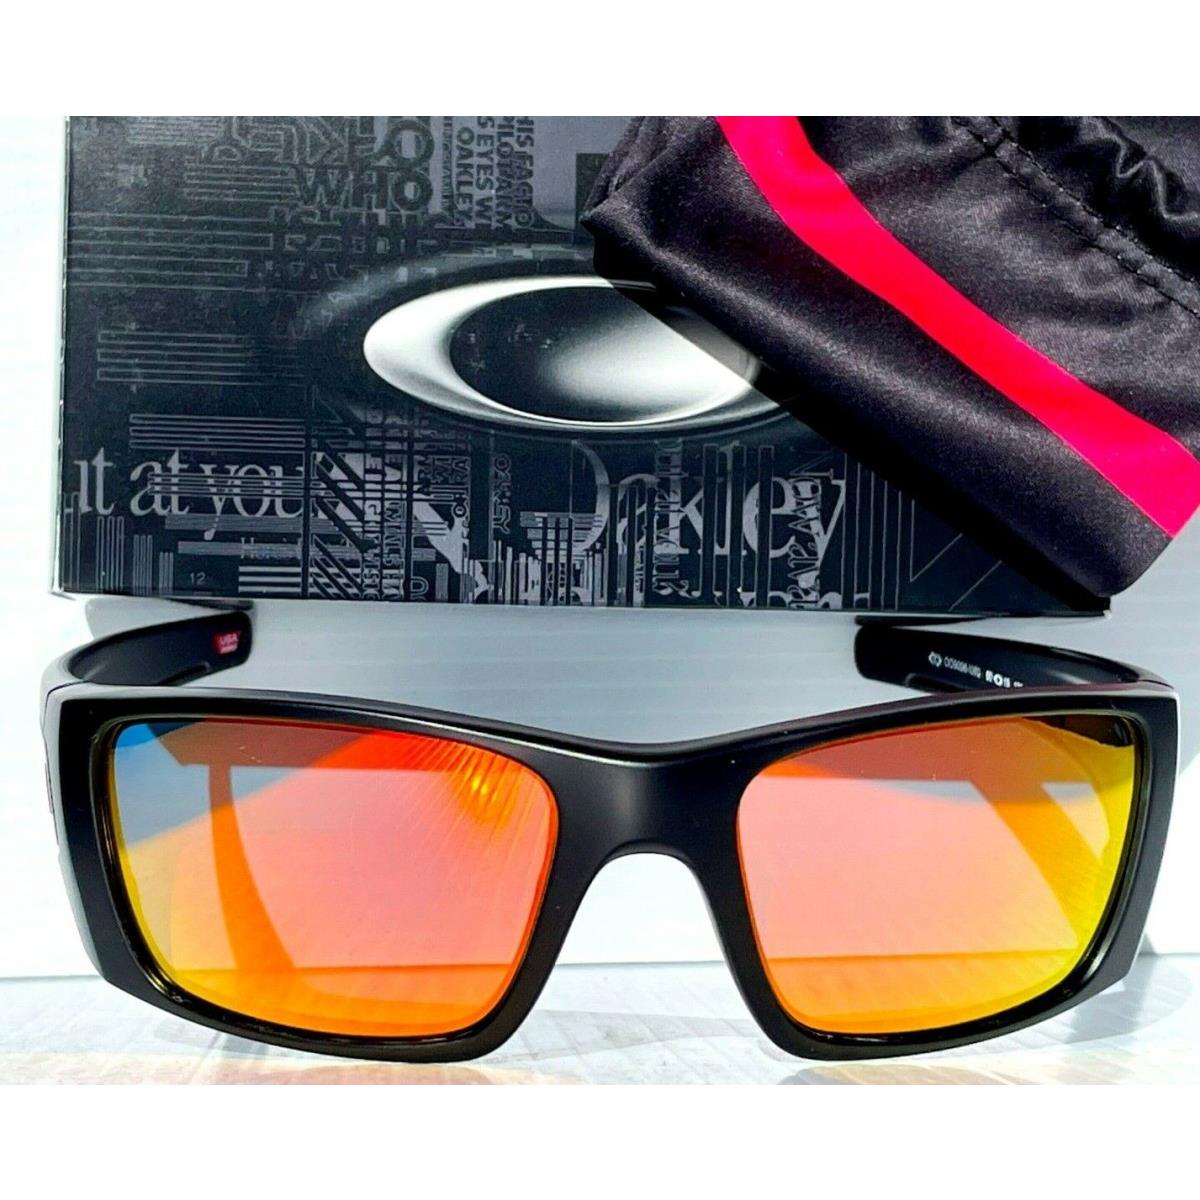 Oakley sunglasses Fuel Cell - Black Frame, Red Lens 3